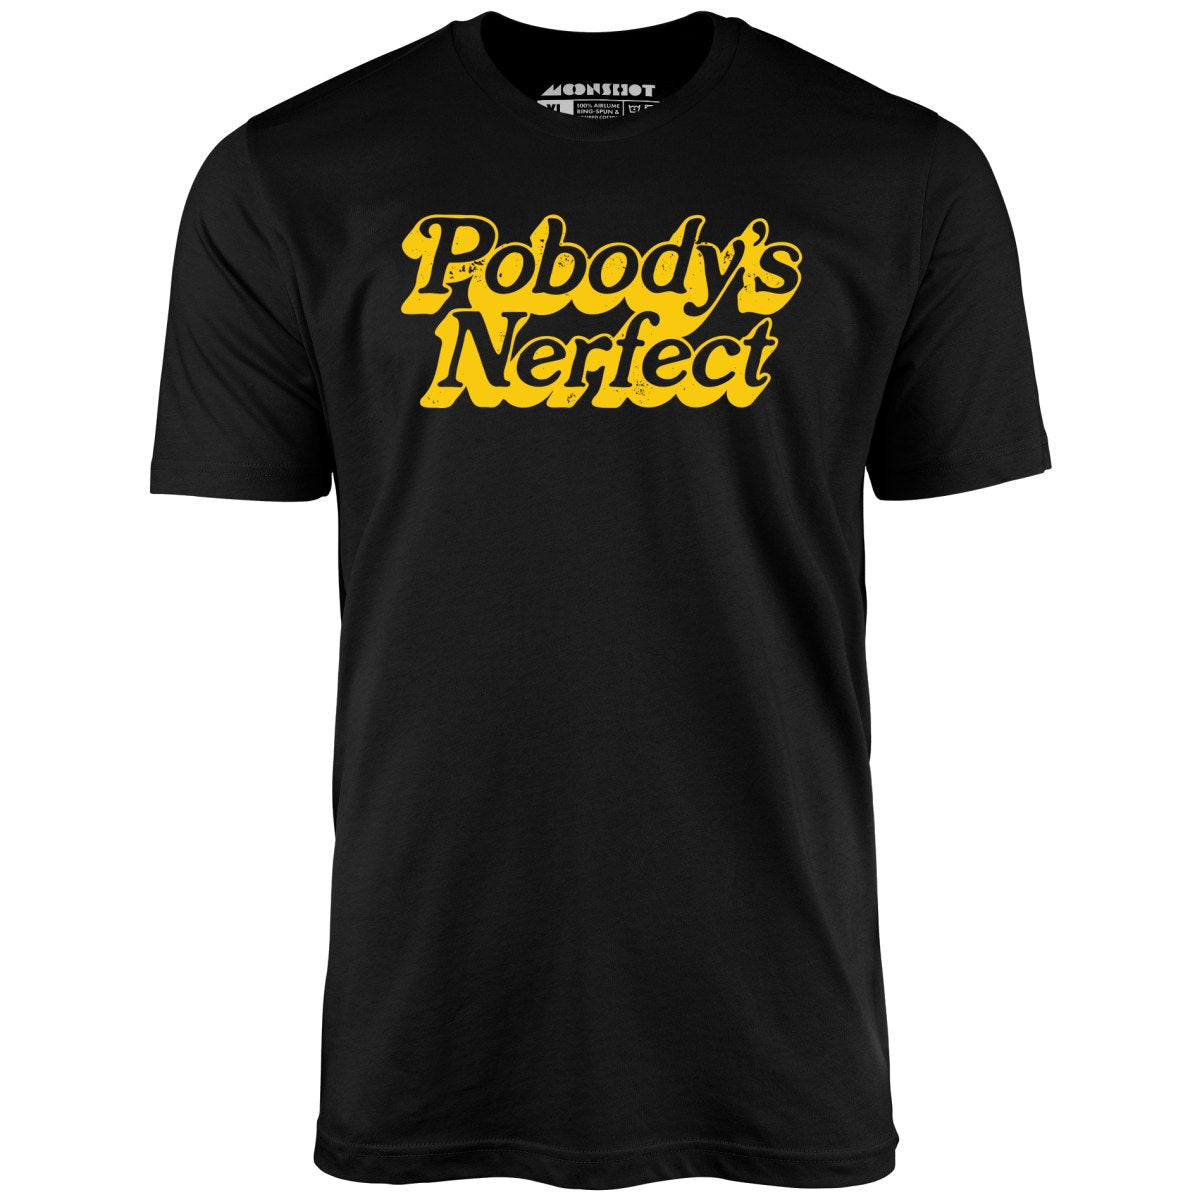 Pobody's Nerfect - Unisex T-Shirt